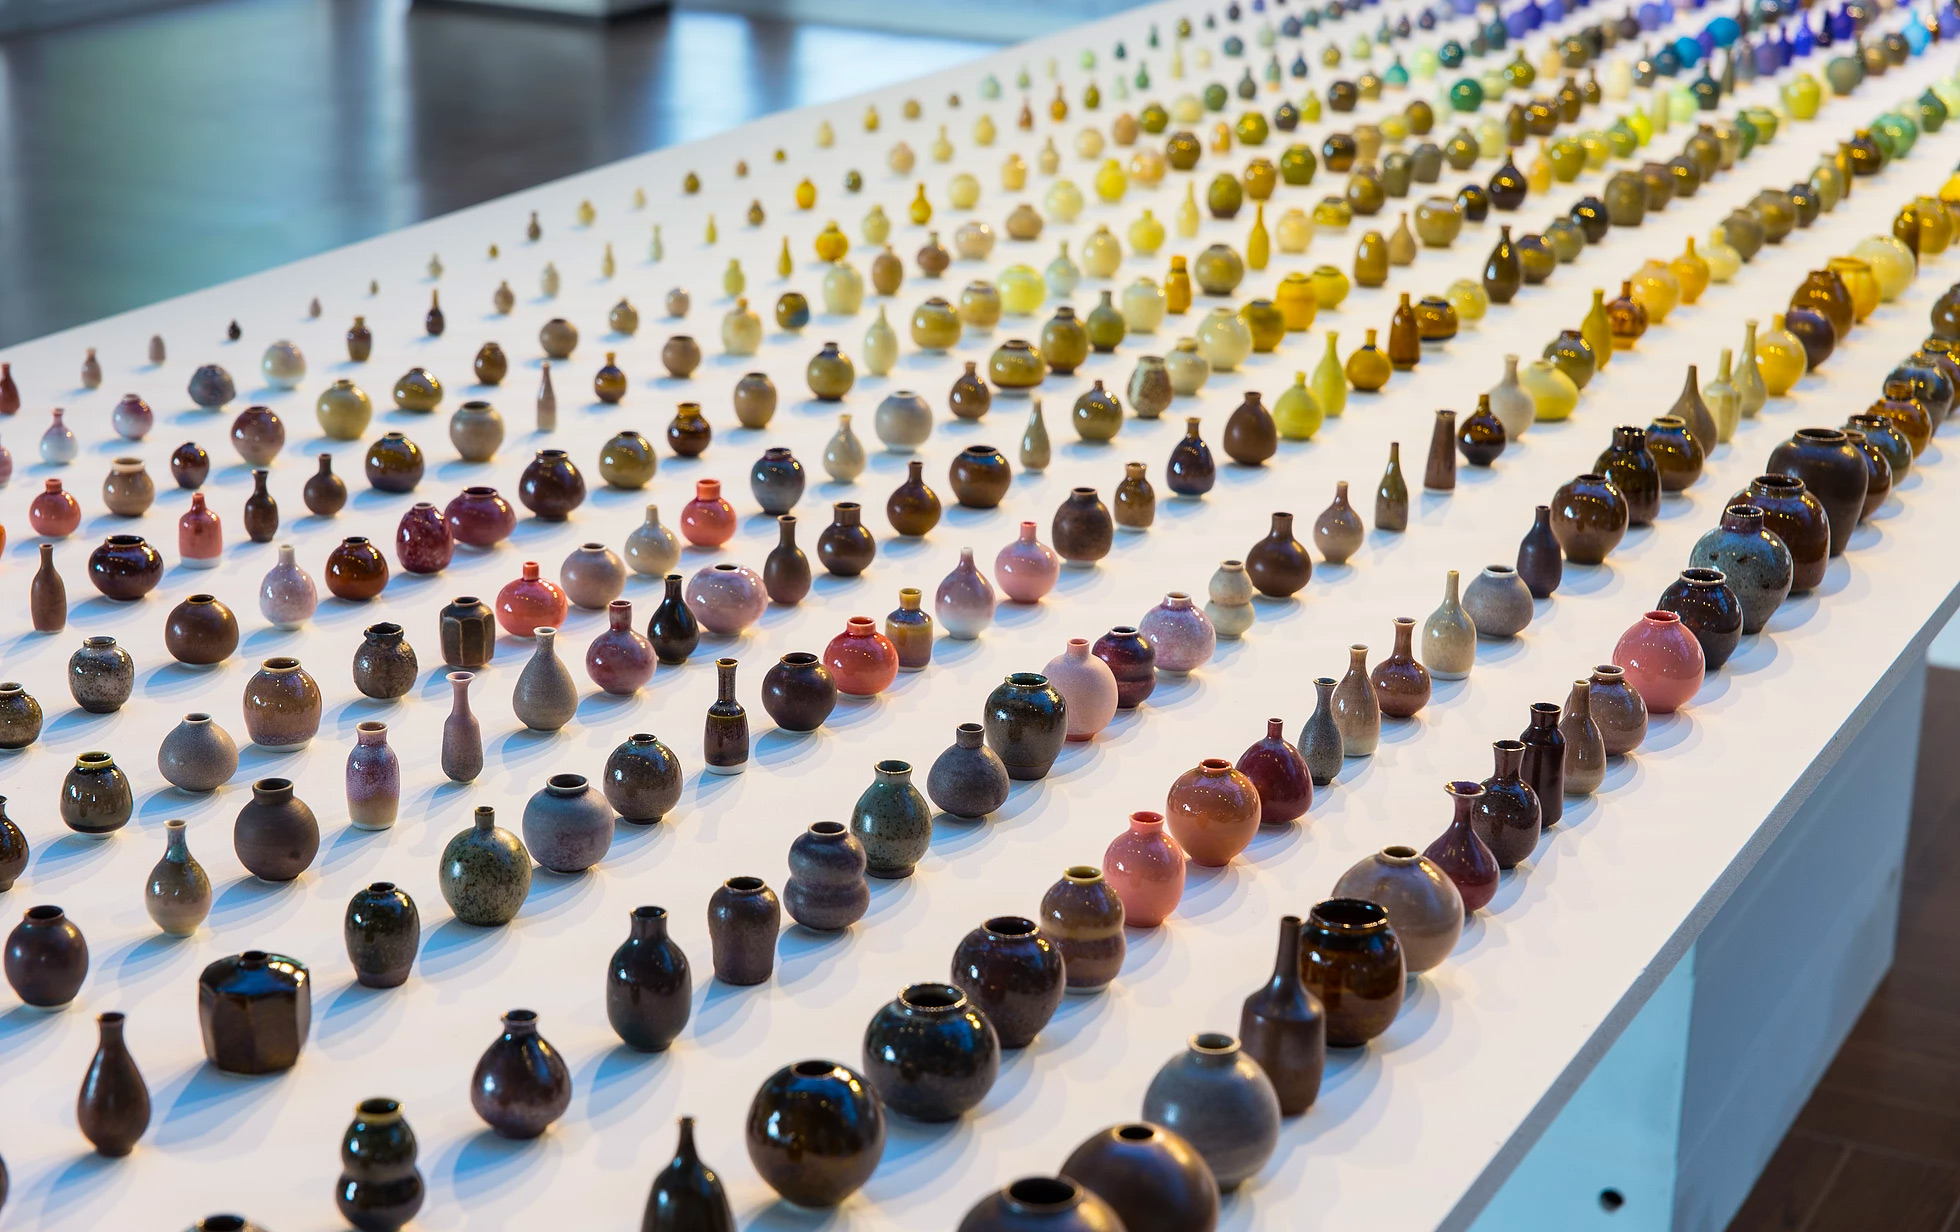 Thousands of Miniature Vases in a Rainbow of Glazes by Ceramic Artist Yuta Segawa